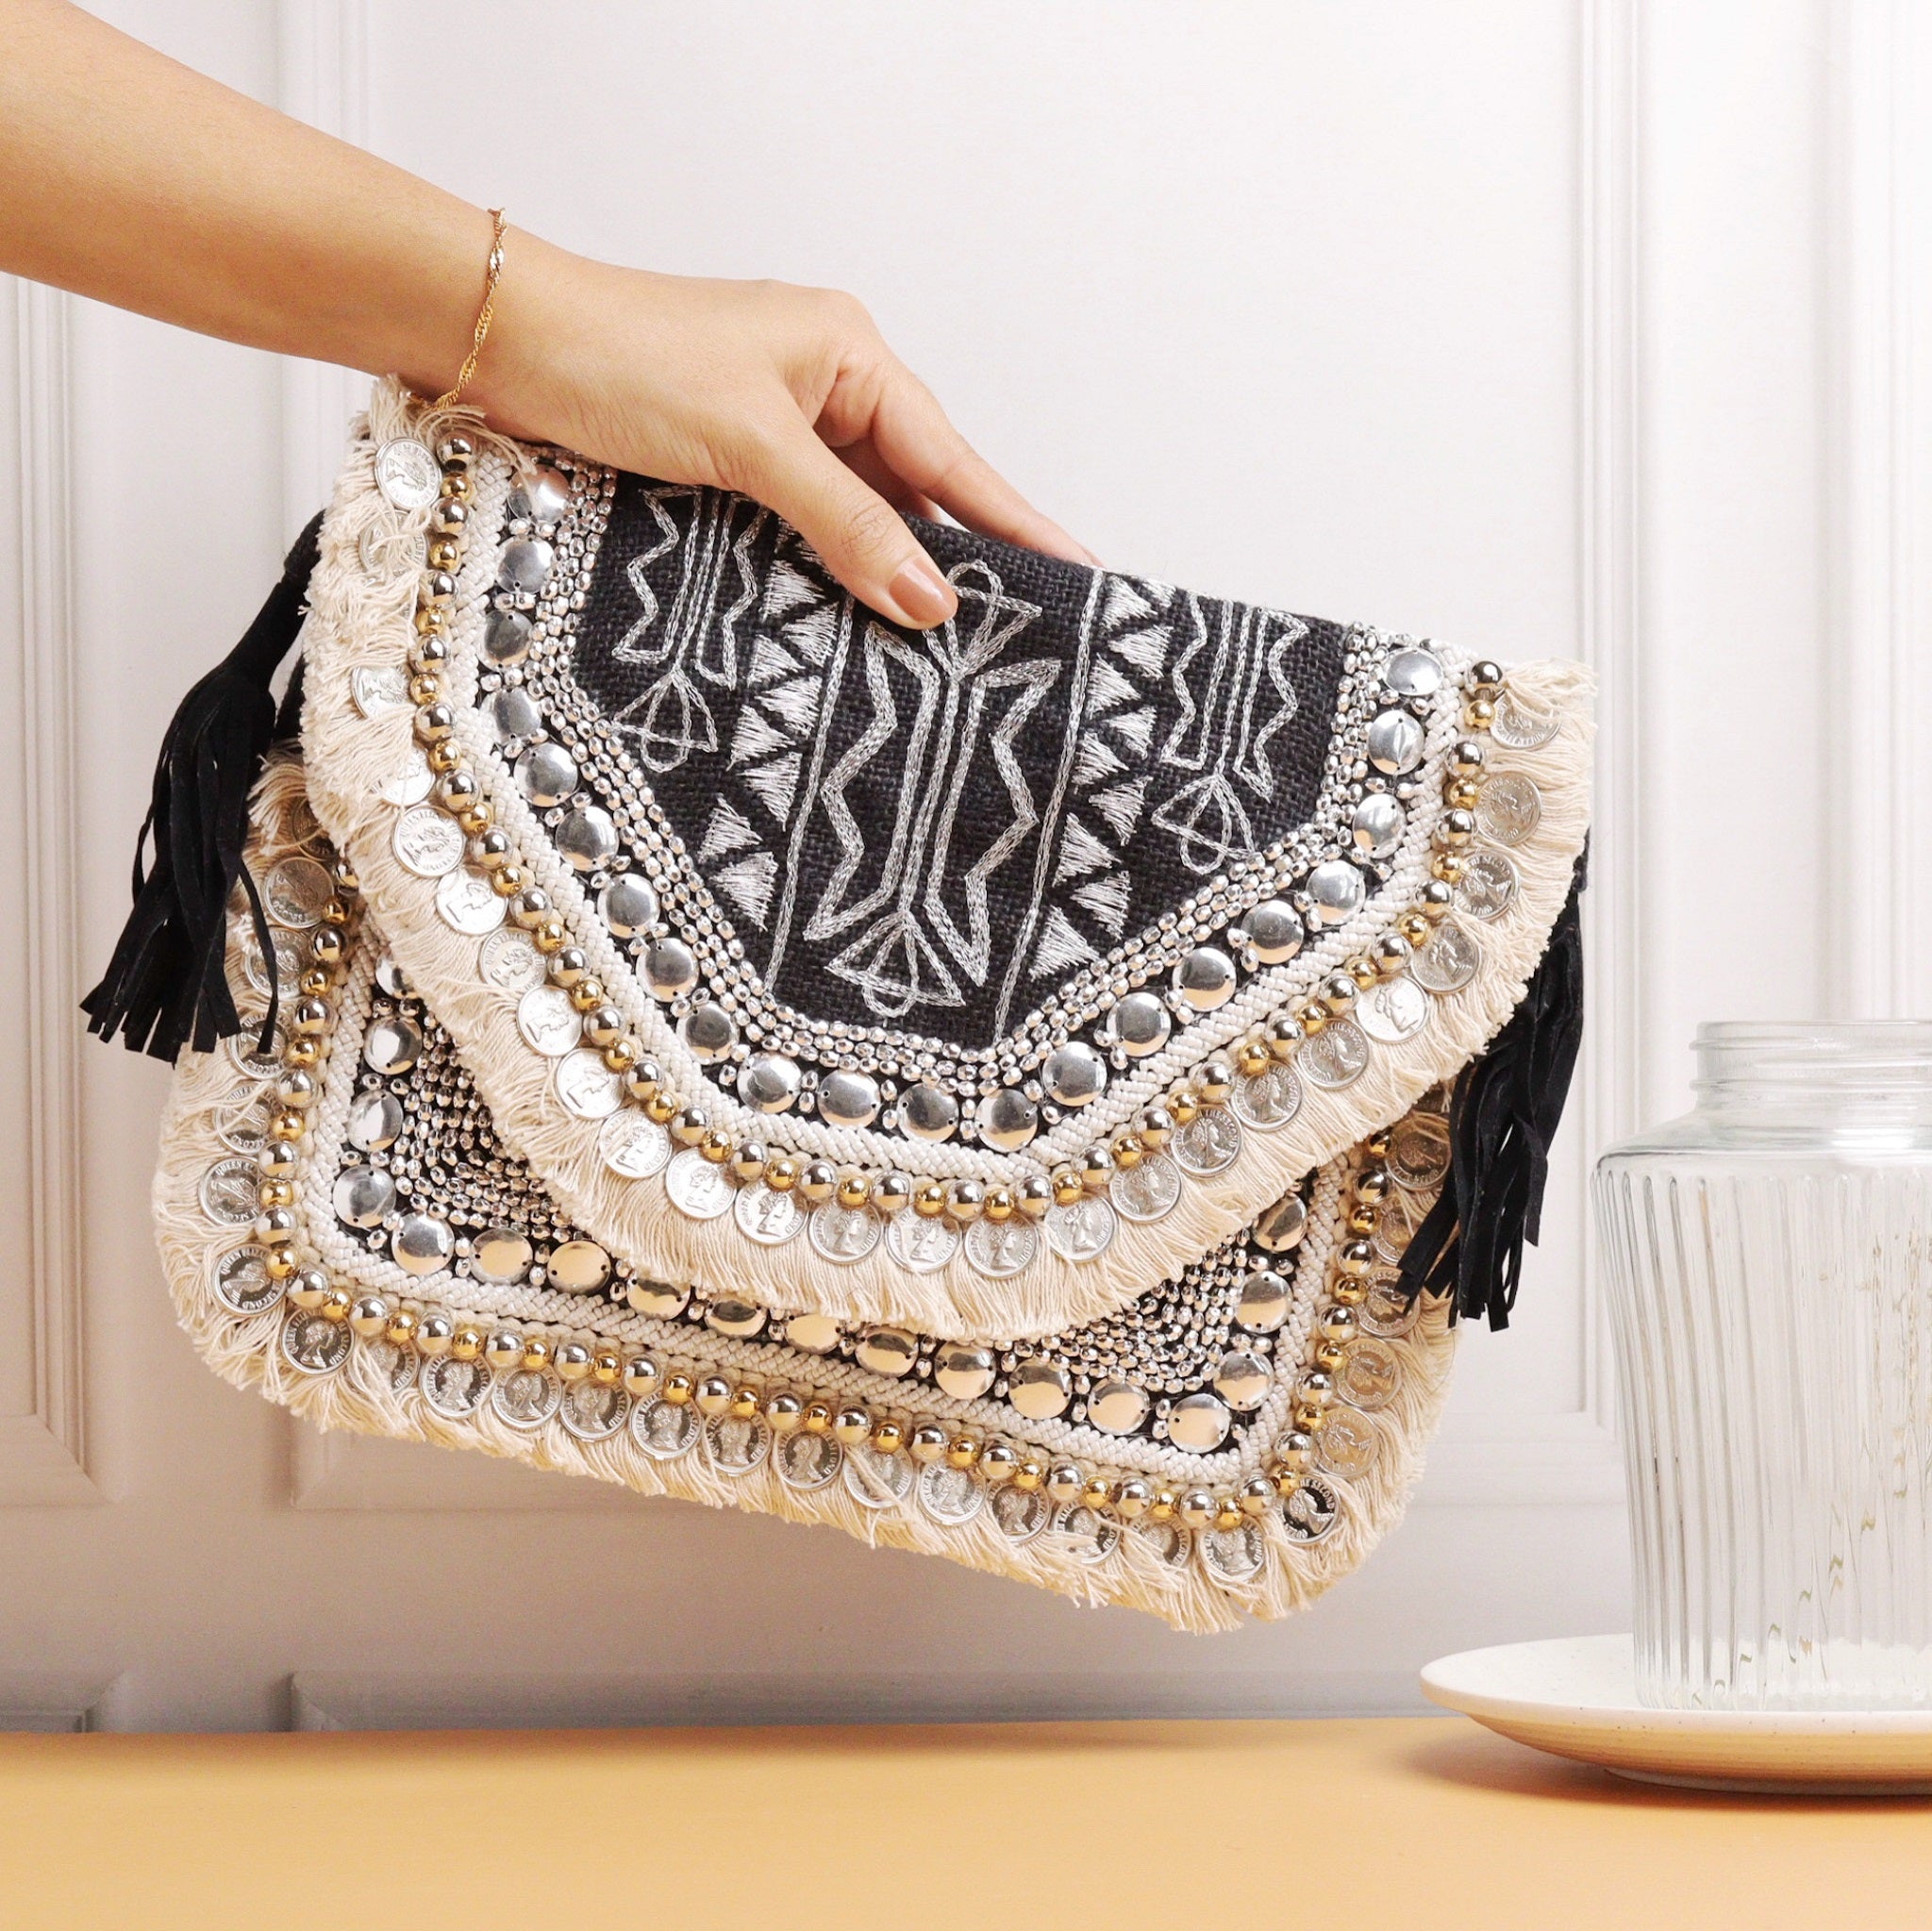 Crochet Shoulder Bag - White